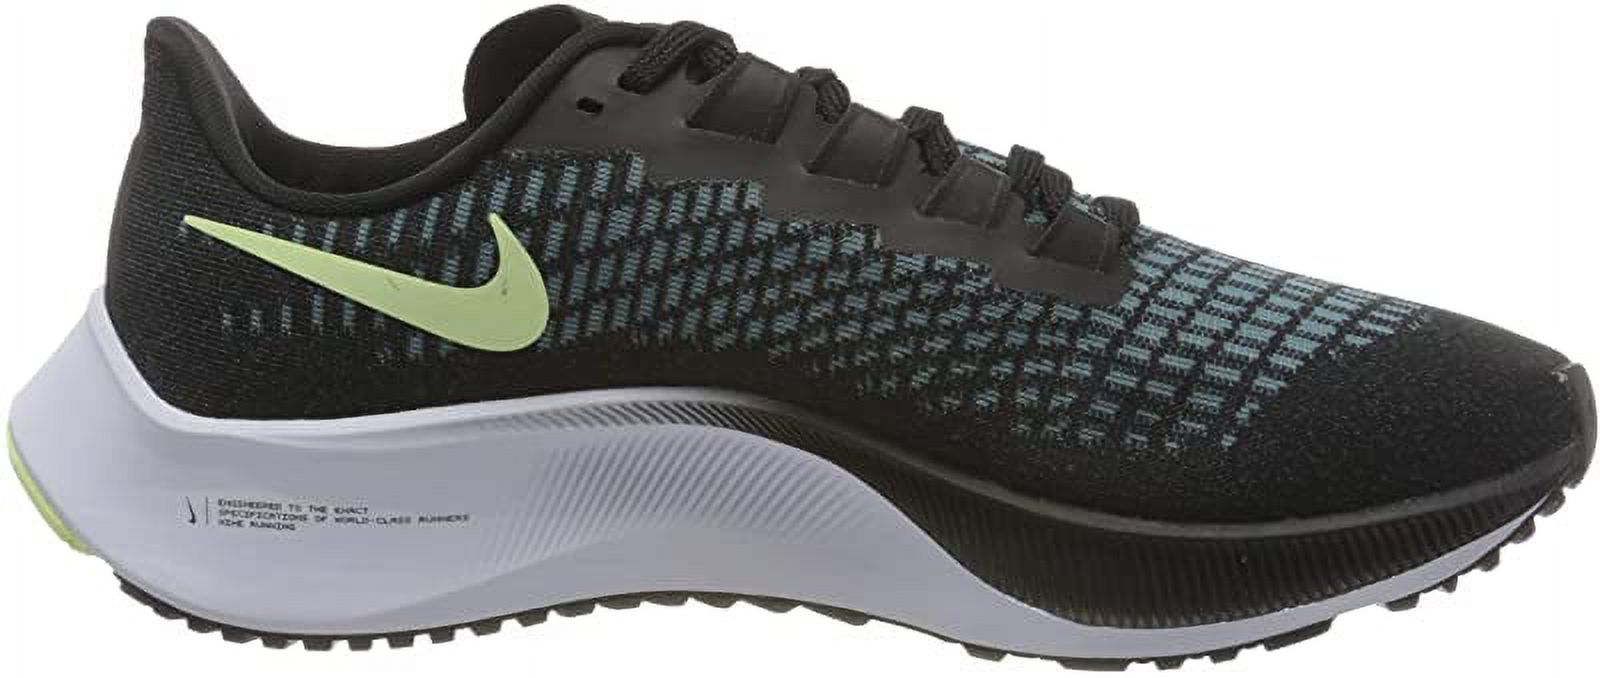 Nike Women's Air Zoom Pegasus 37 Running Shoes, Glacier Ice/Volt, 7.5 B(M) US - image 3 of 4